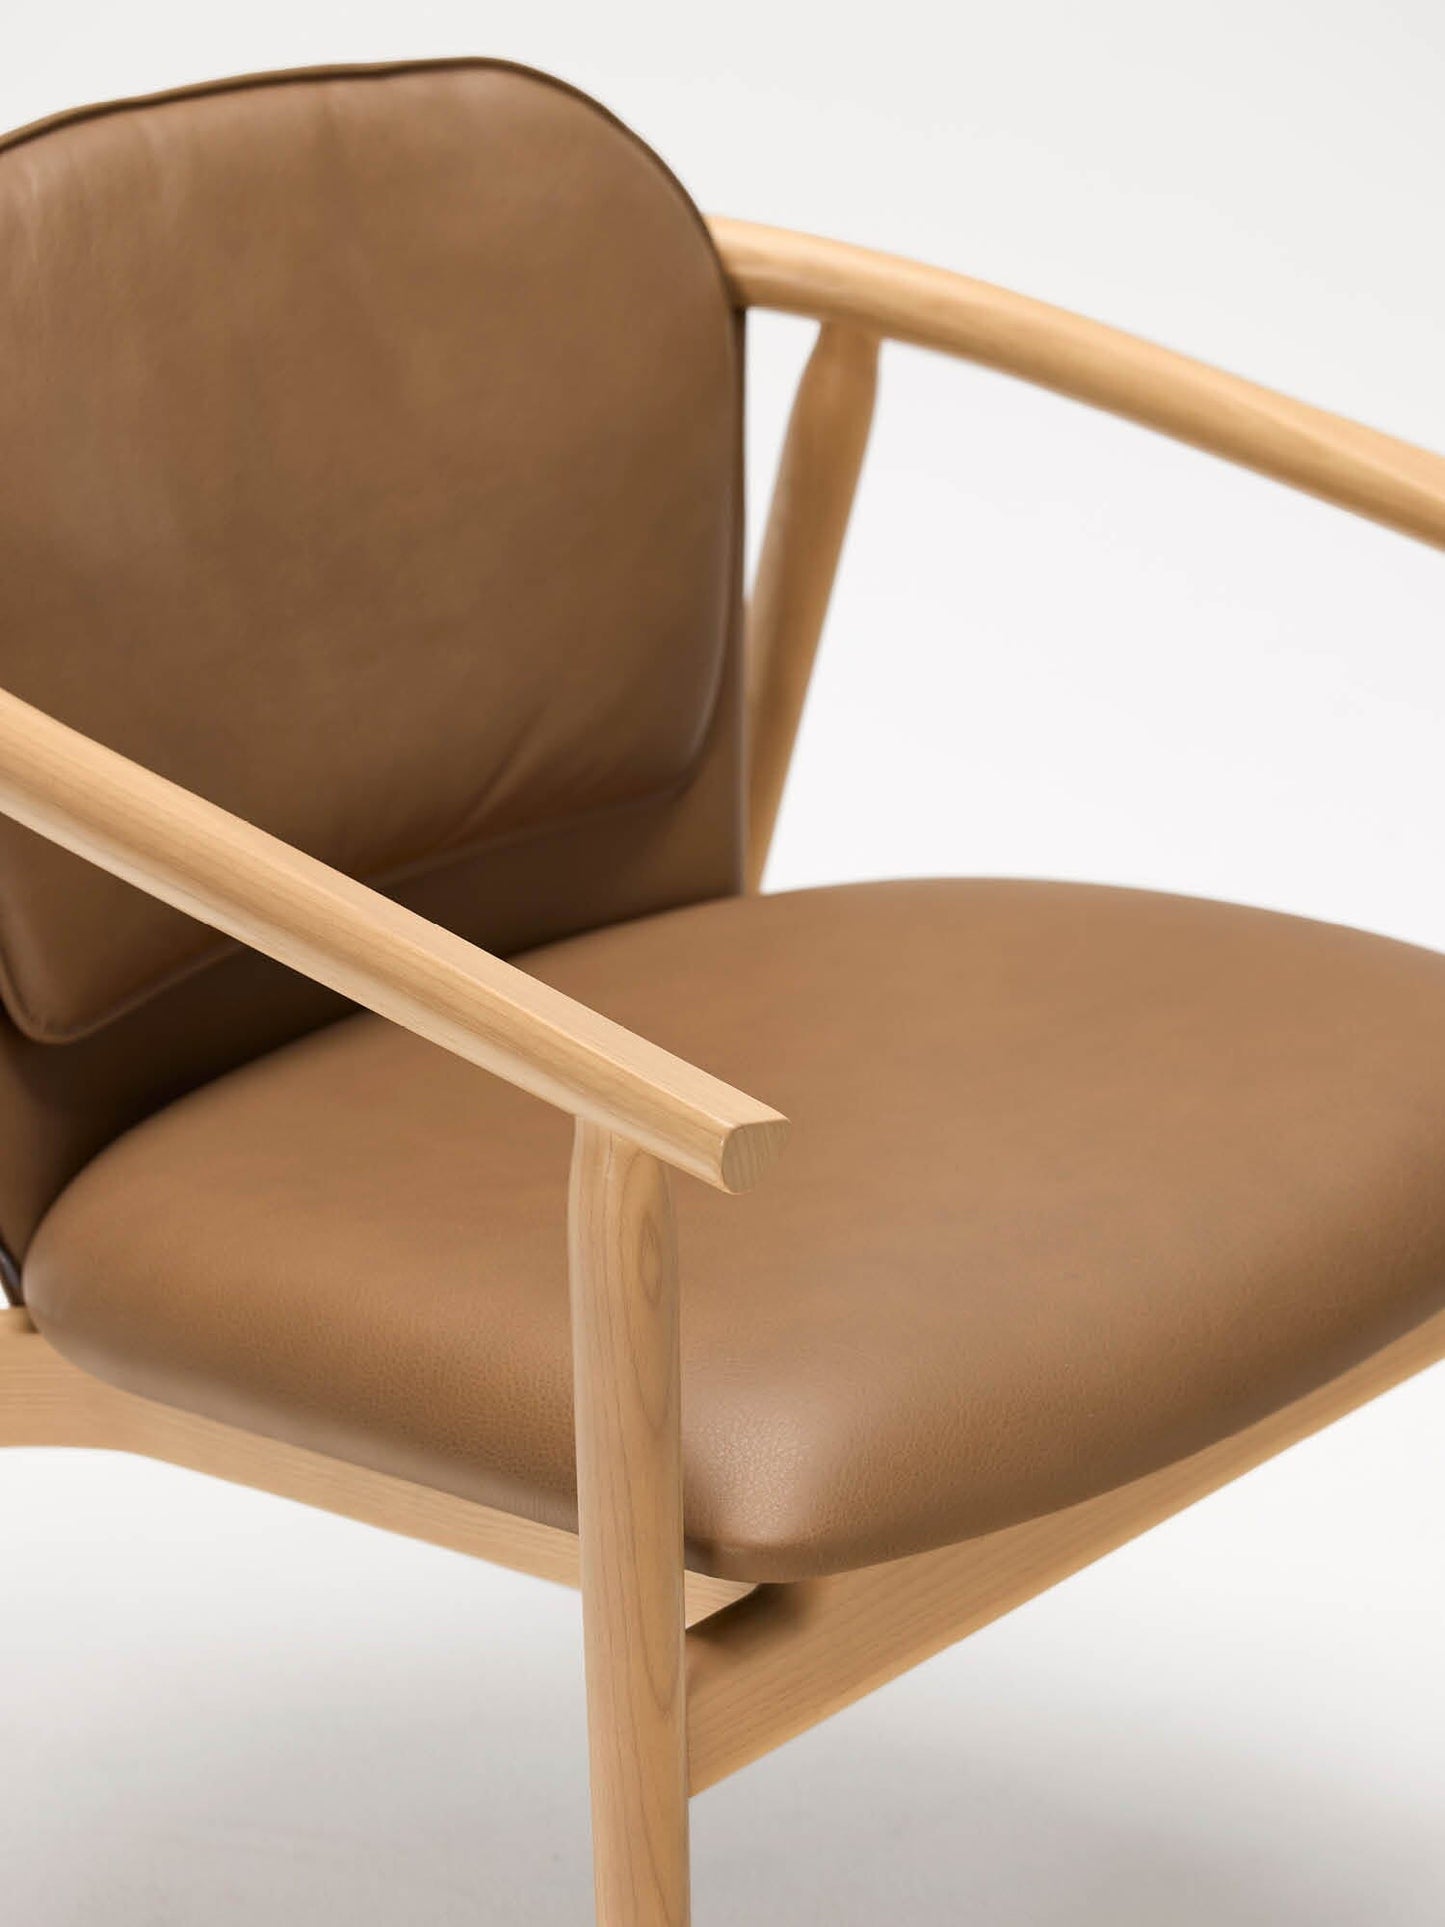 Otway Leather Lounge Chair 15% Off Indoor Furniture Kett 